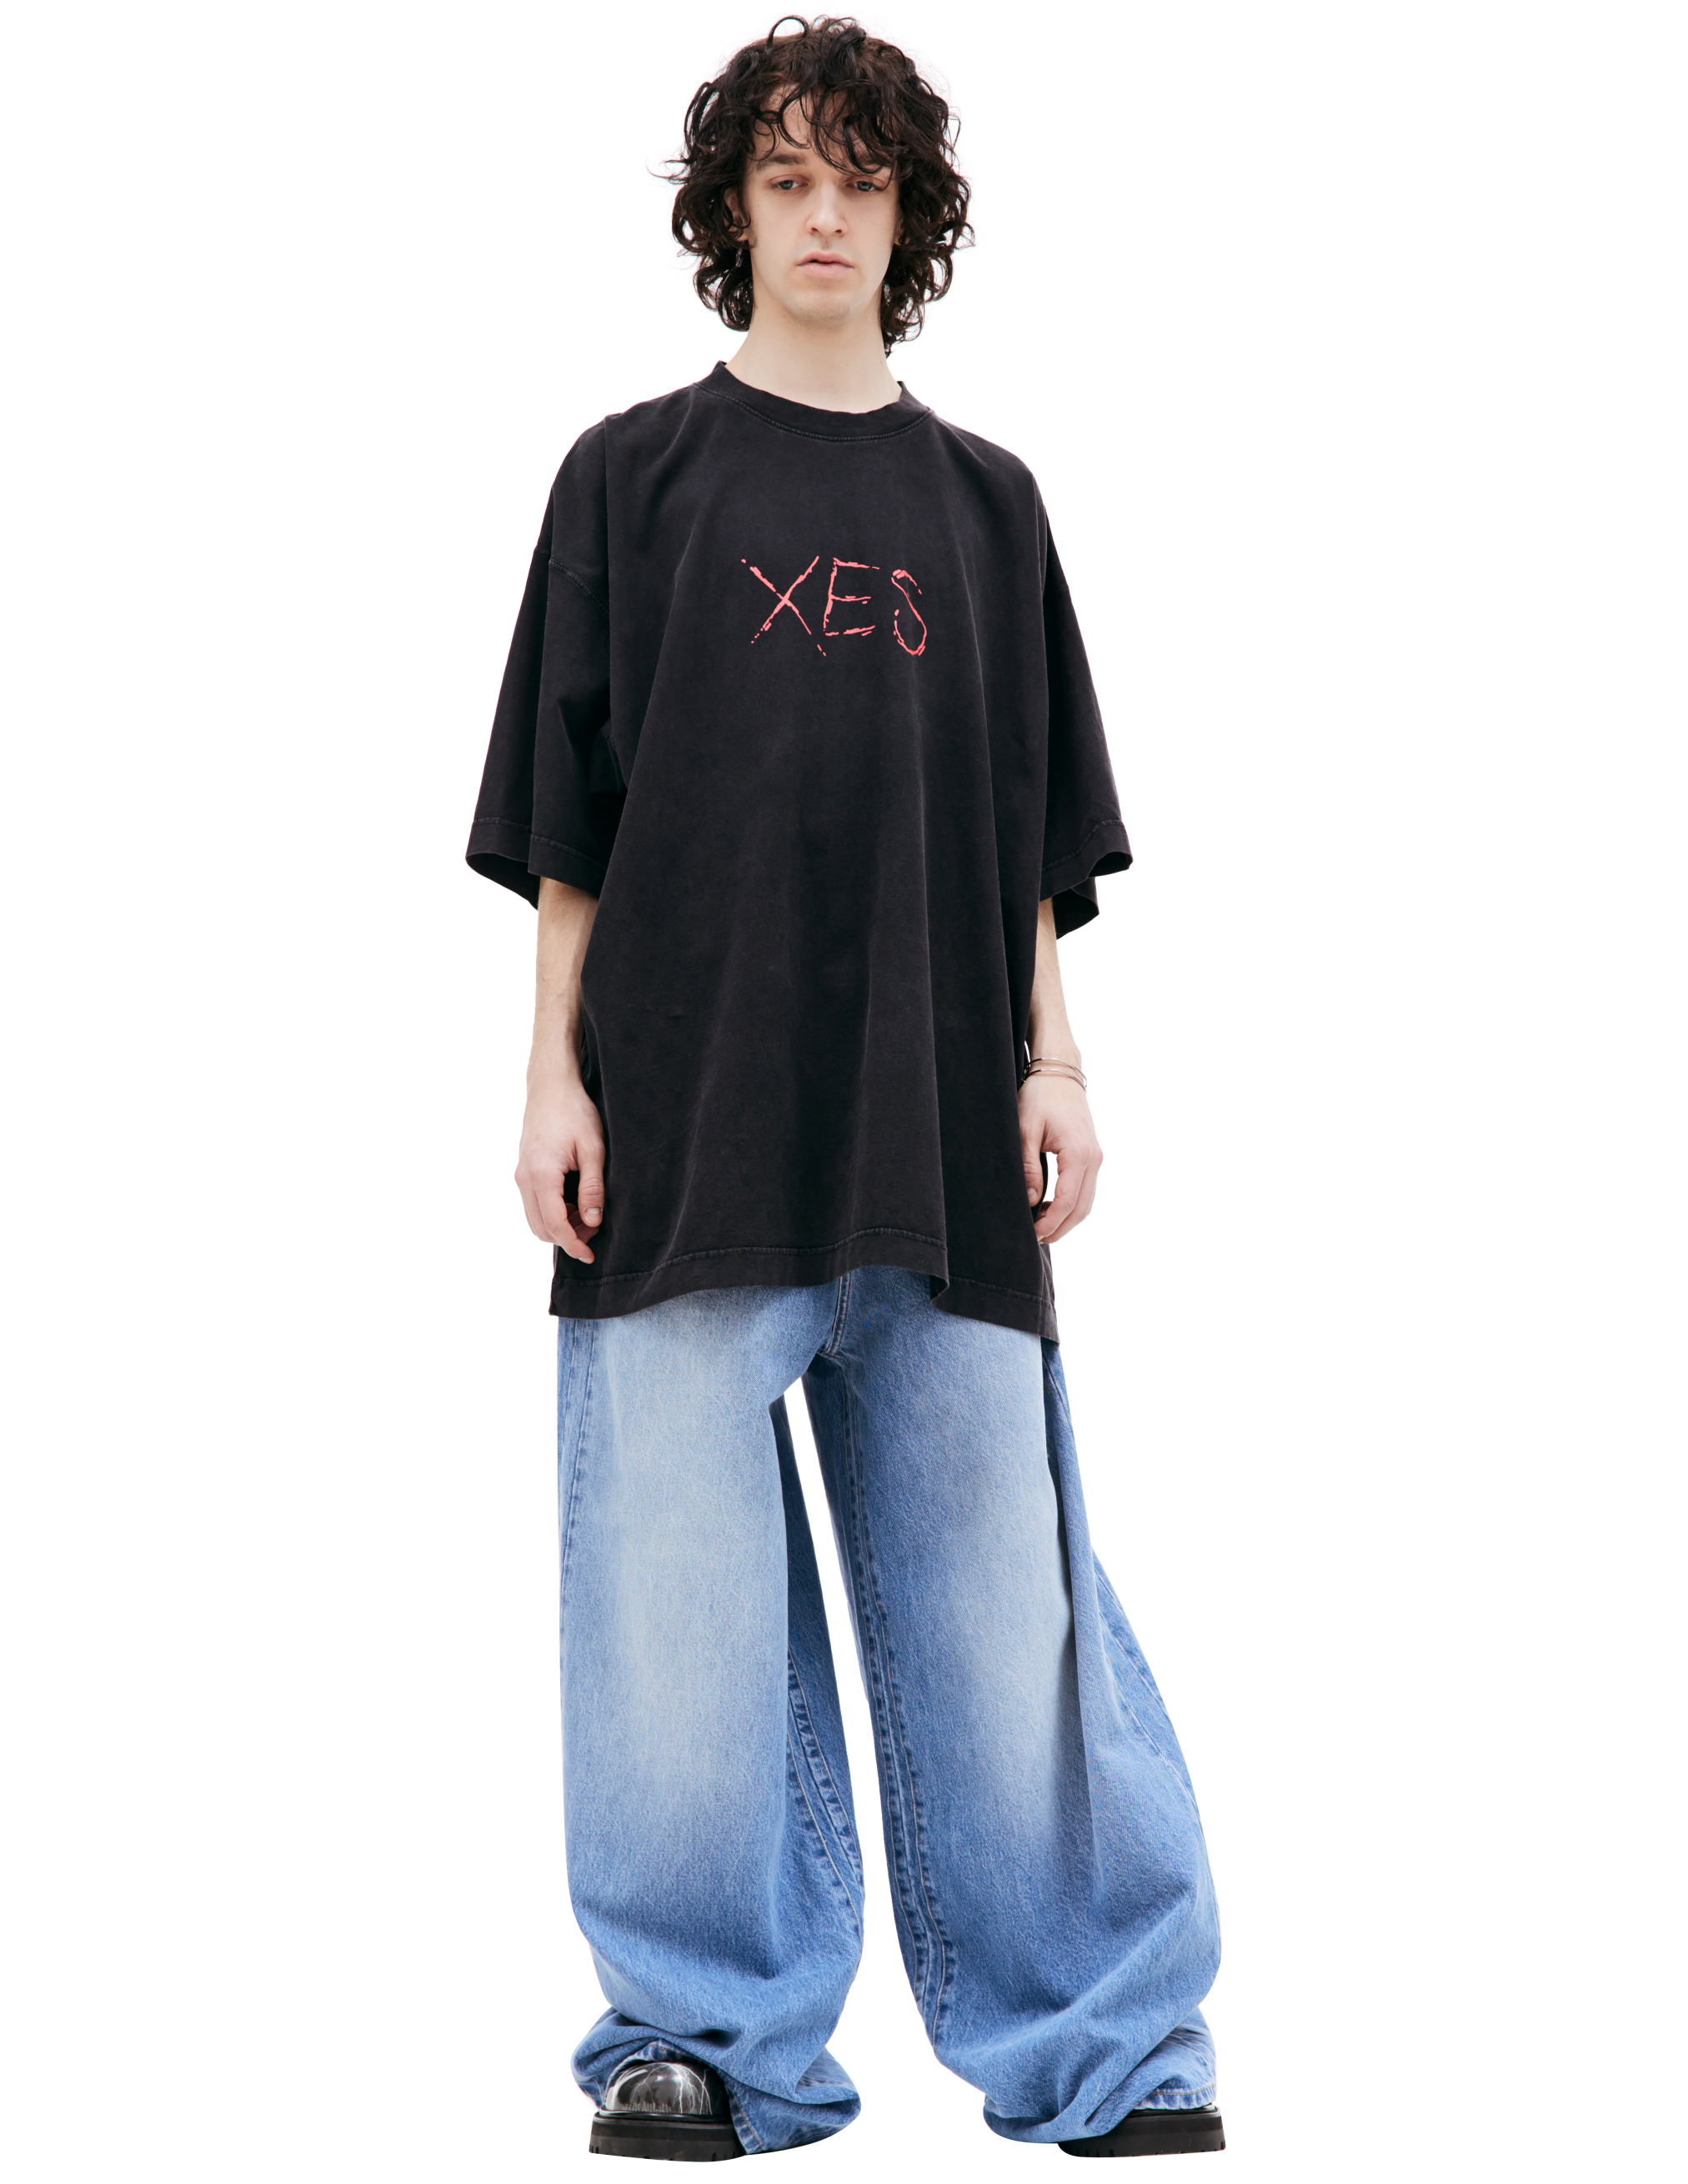 Vetements Xes Printed T-shirt In Black